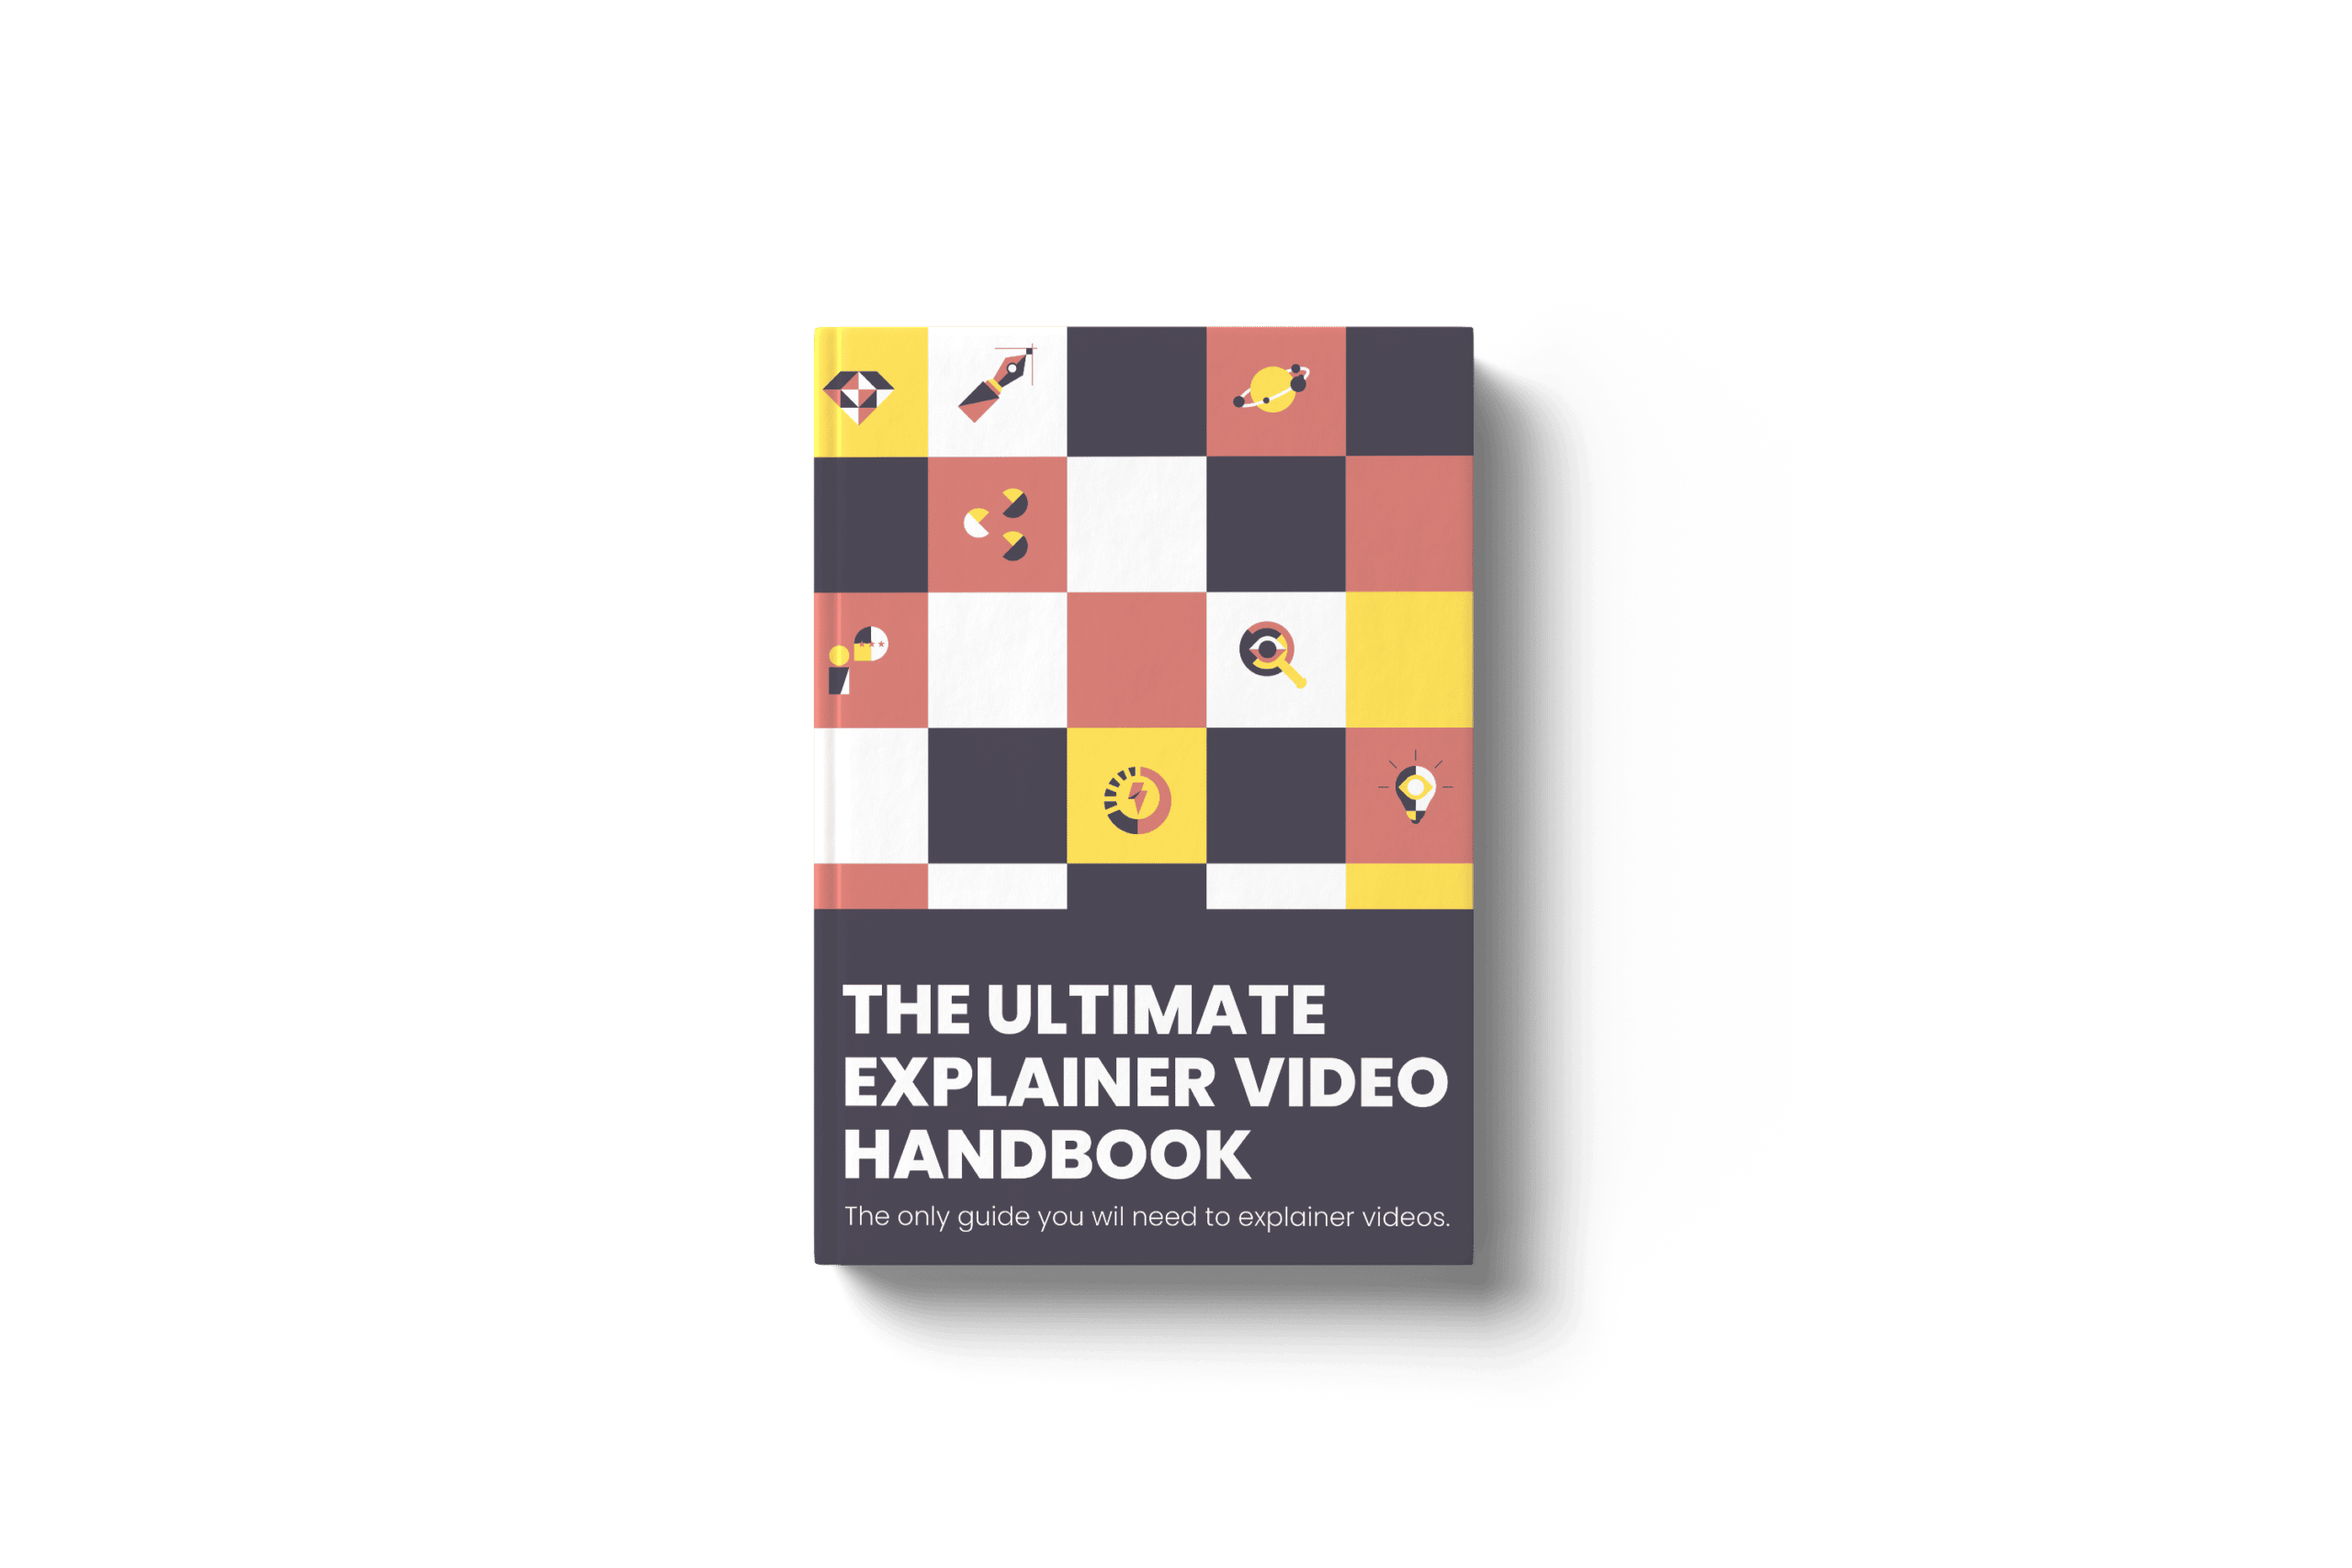 The Ultimate Explainer Video Handbook